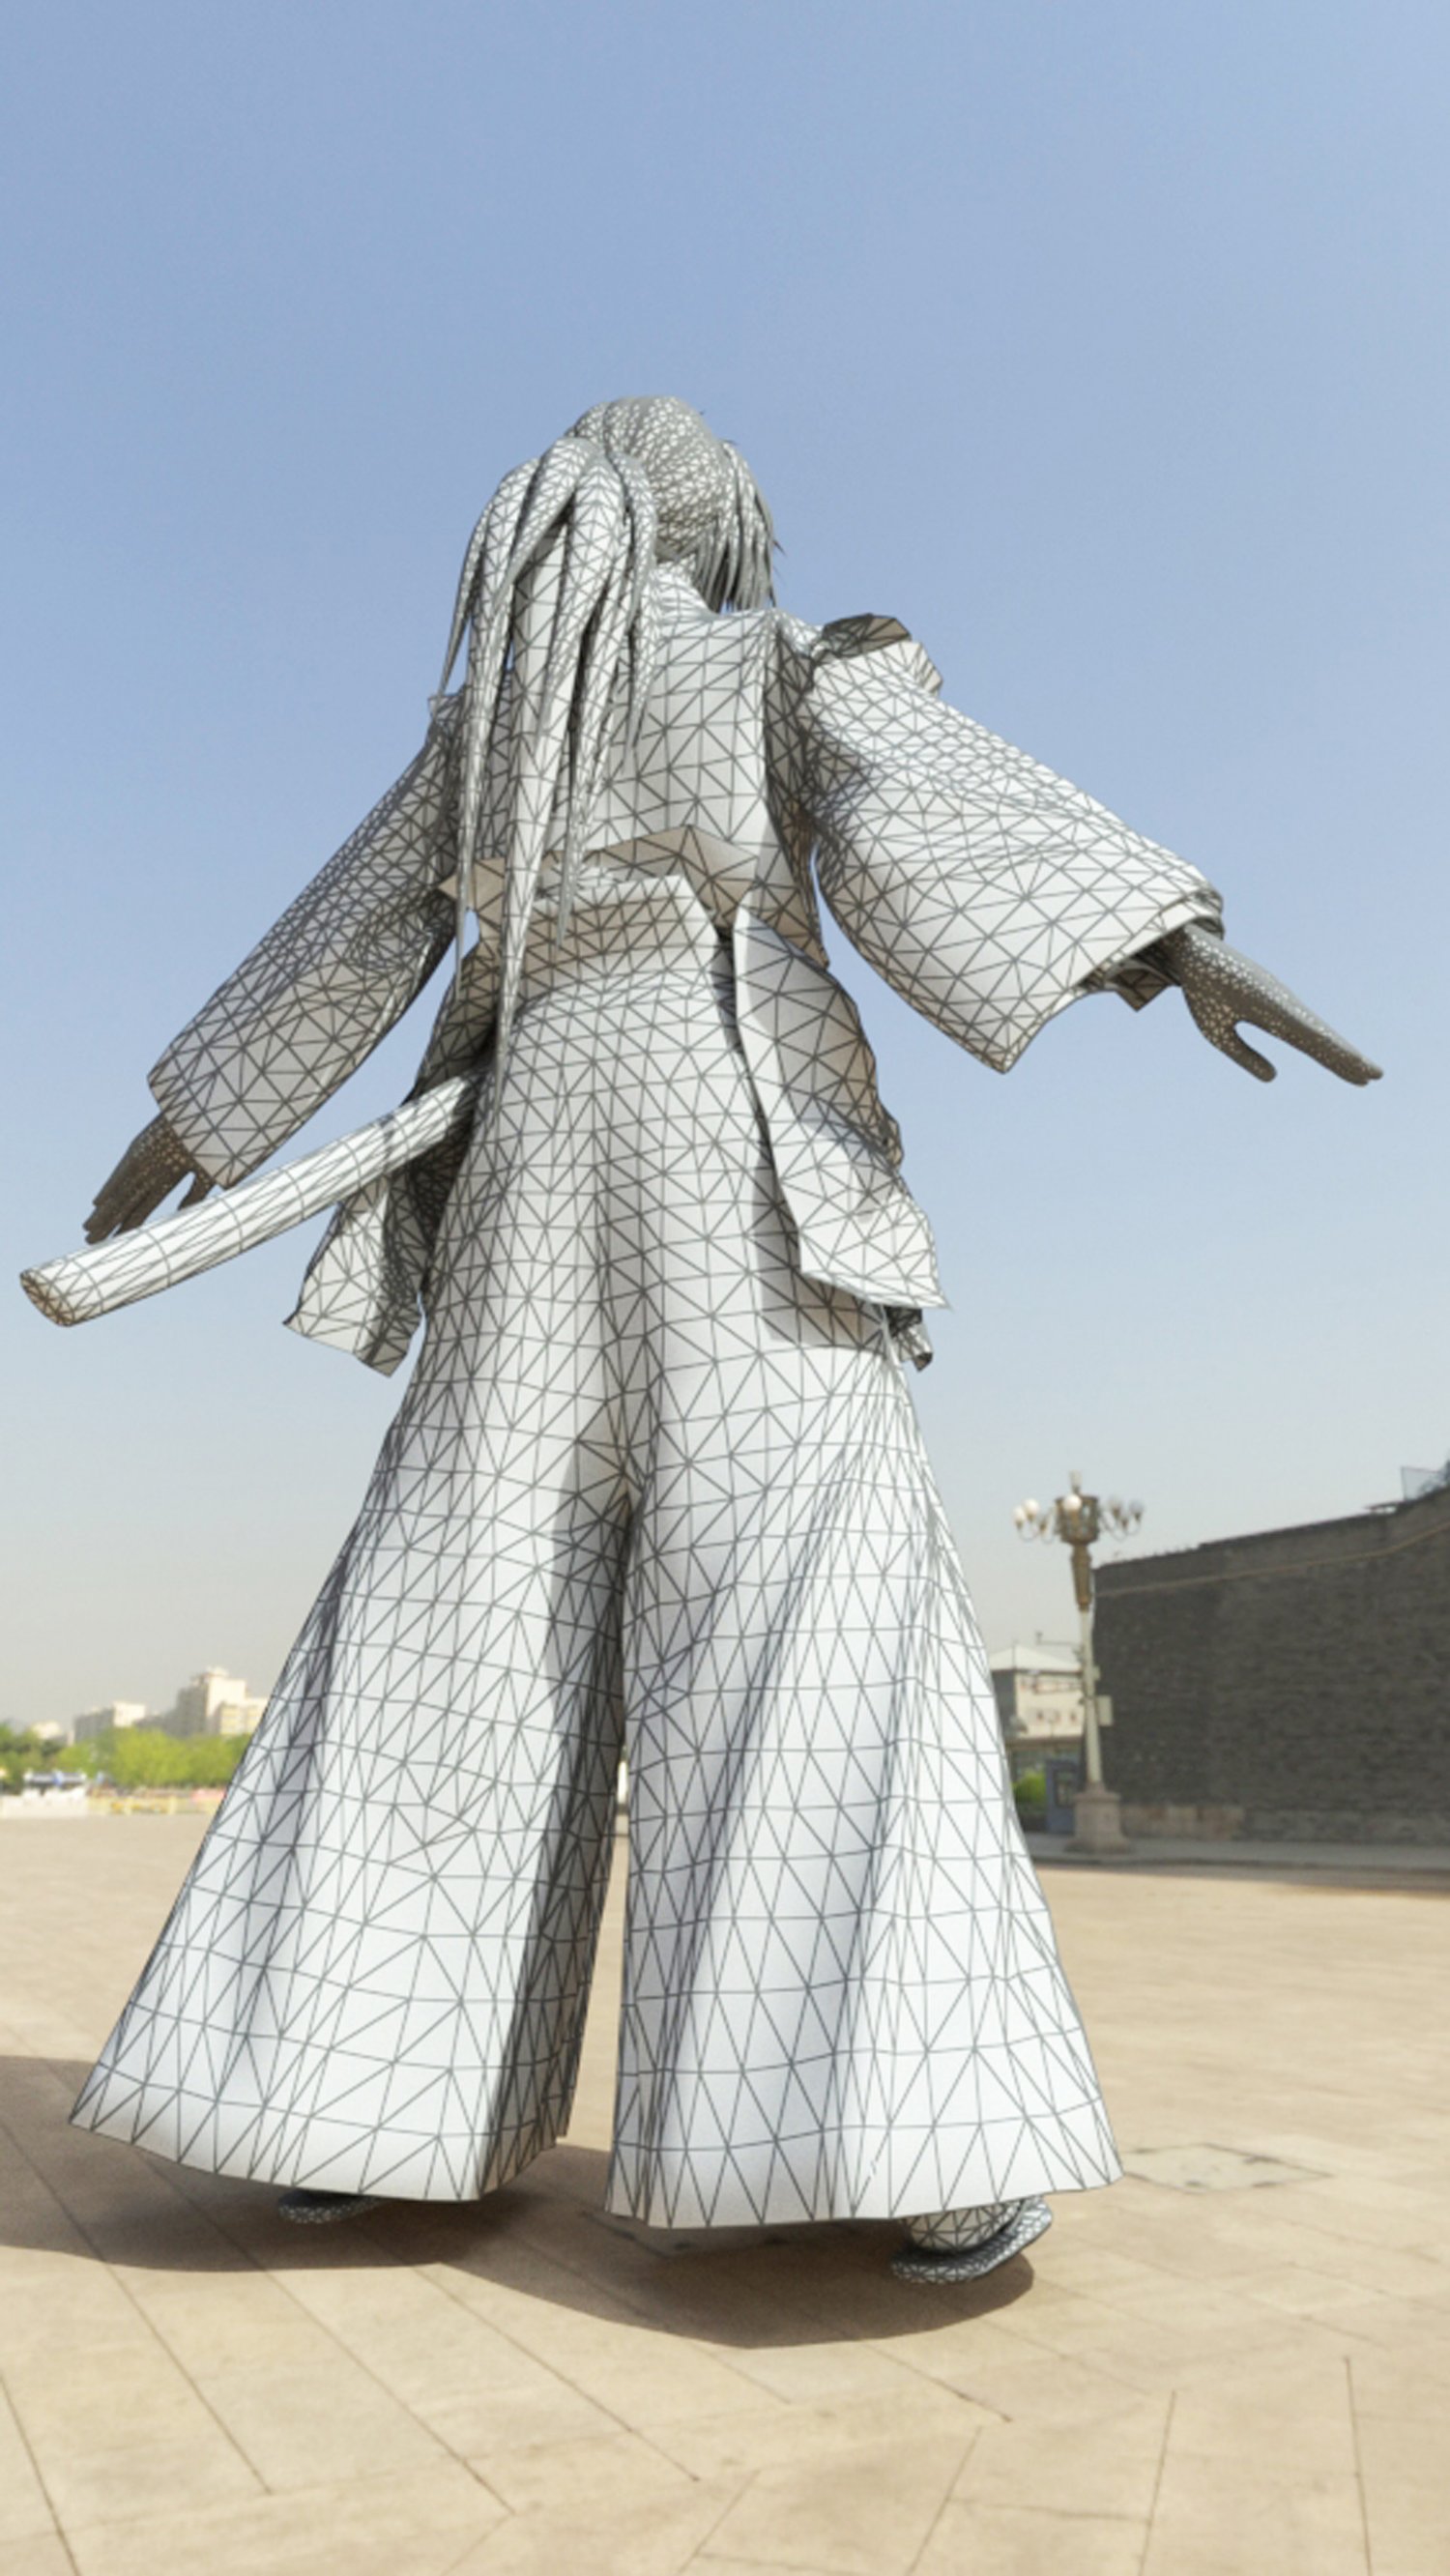 3D file Himura Kenshin - Rurouni Kenshin Anime Figurine for 3D